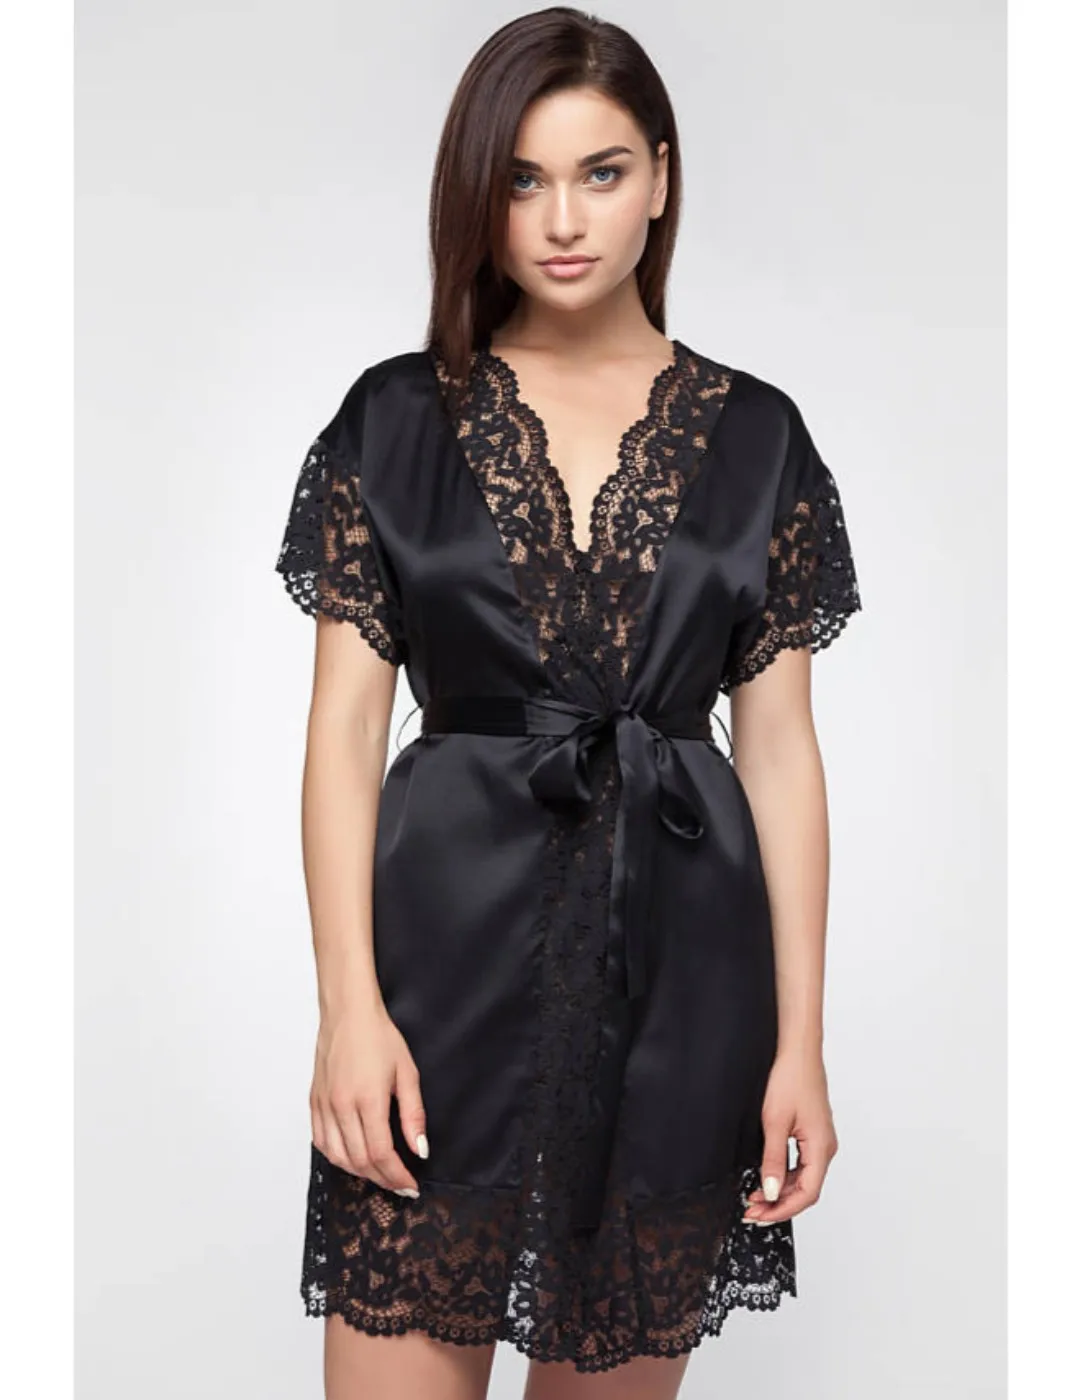 Short Black Poly Silk Lace Robe - Buy Lace Trimmed Black Robe,Fancy ...